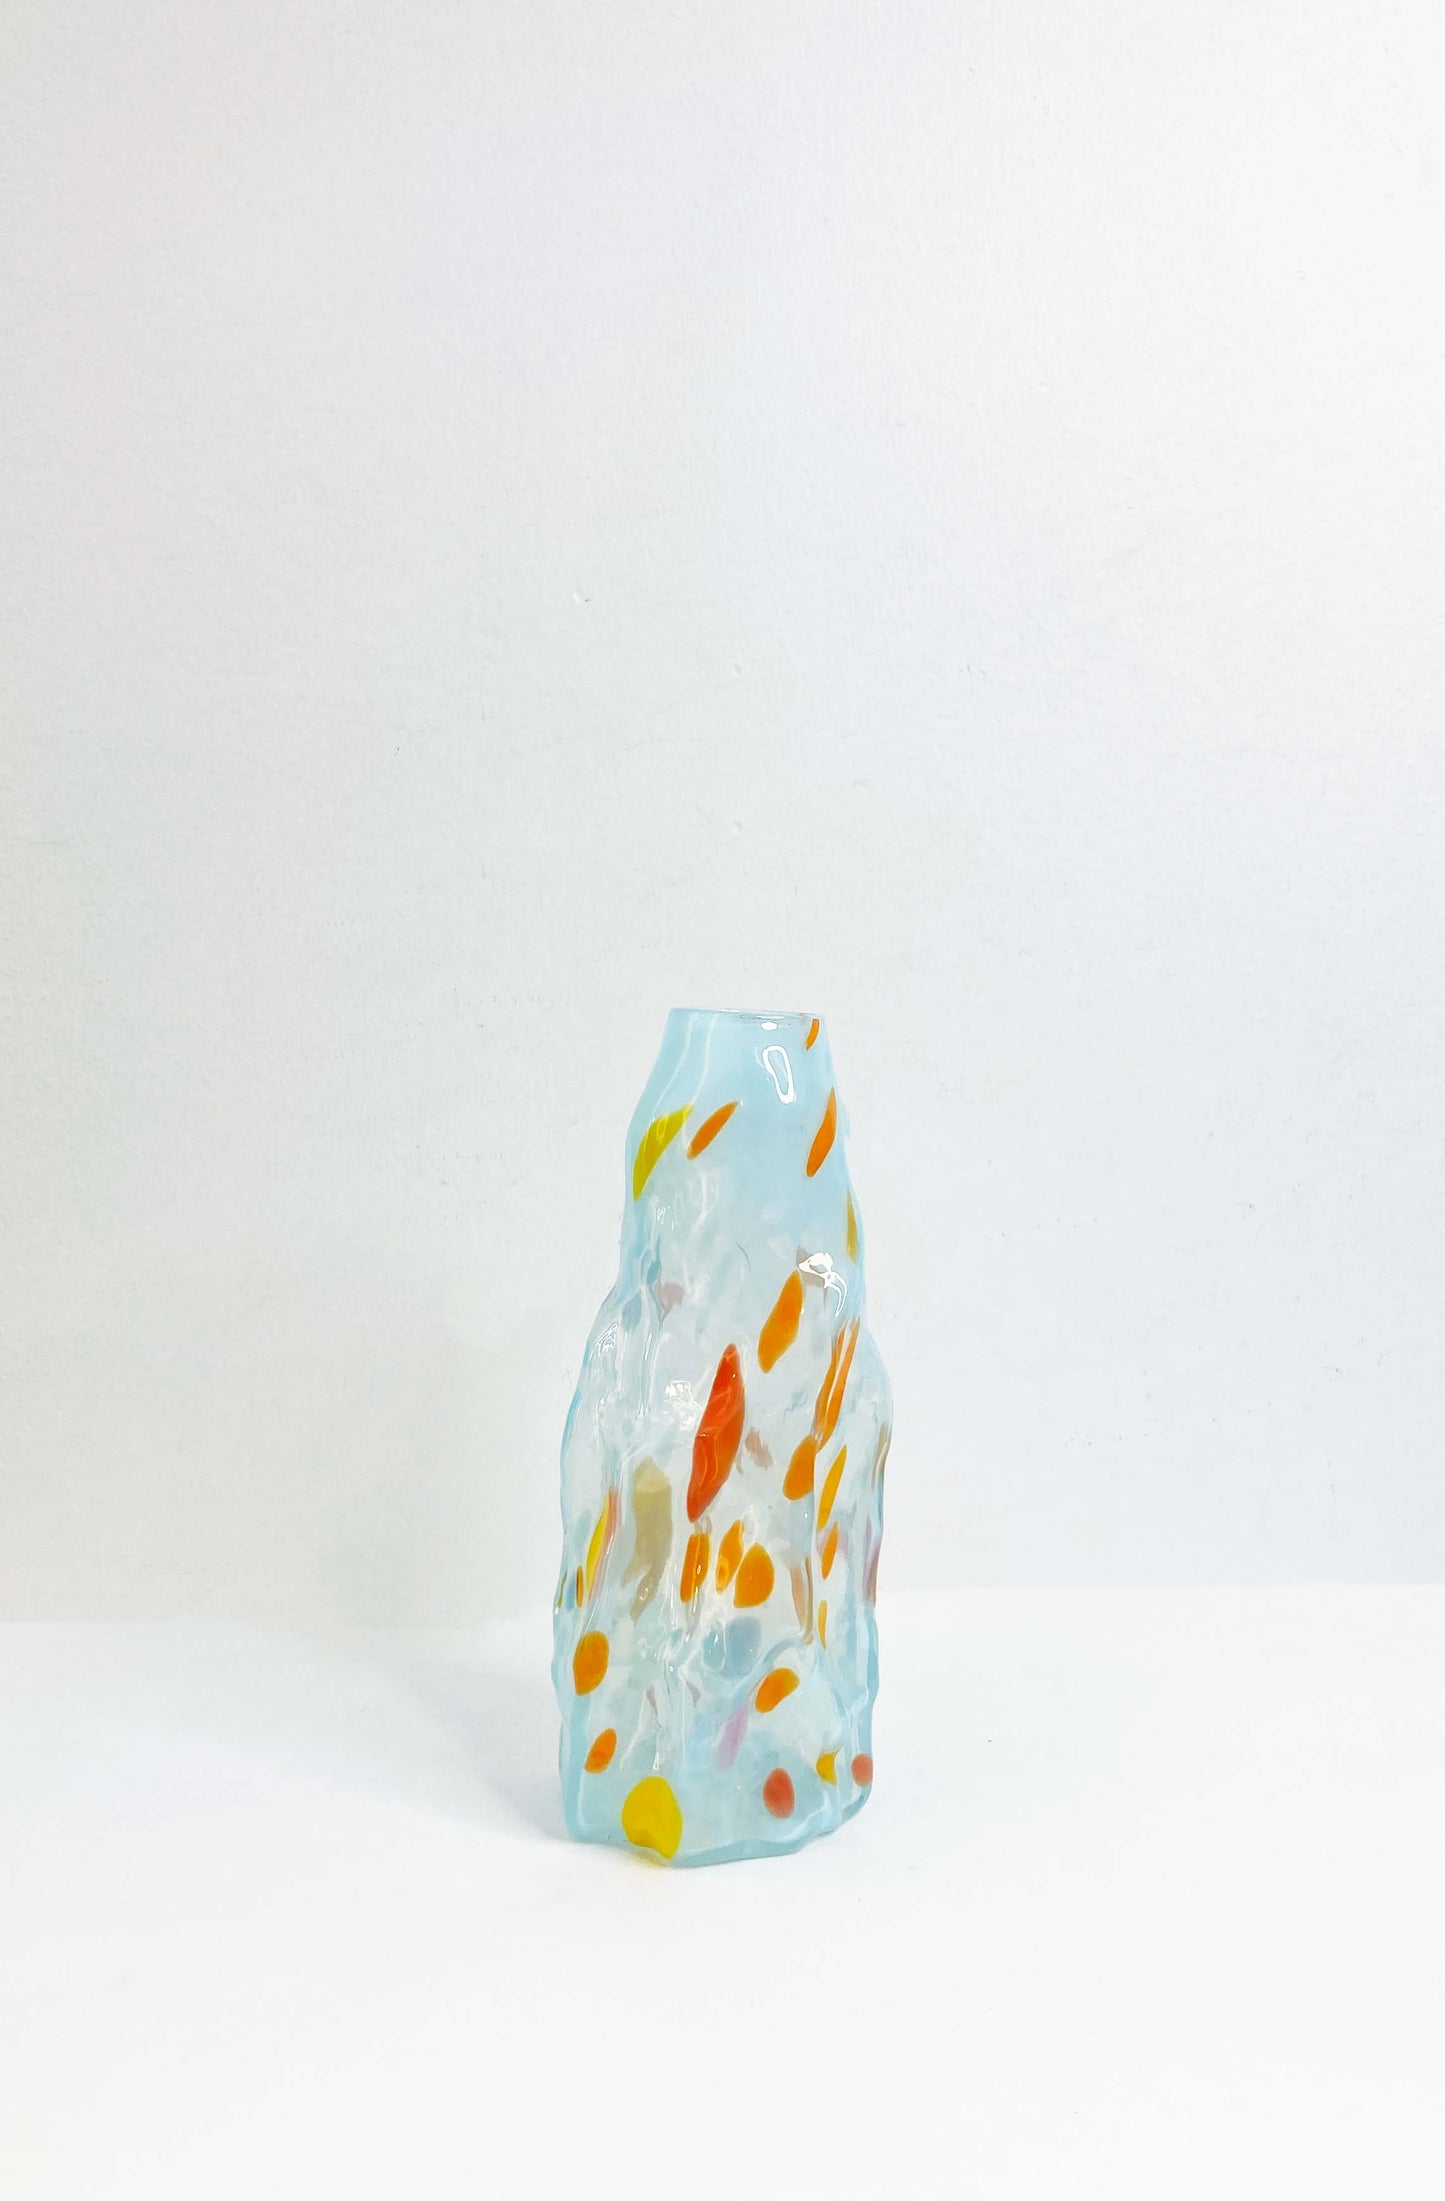 Small Glass Vase no. 1